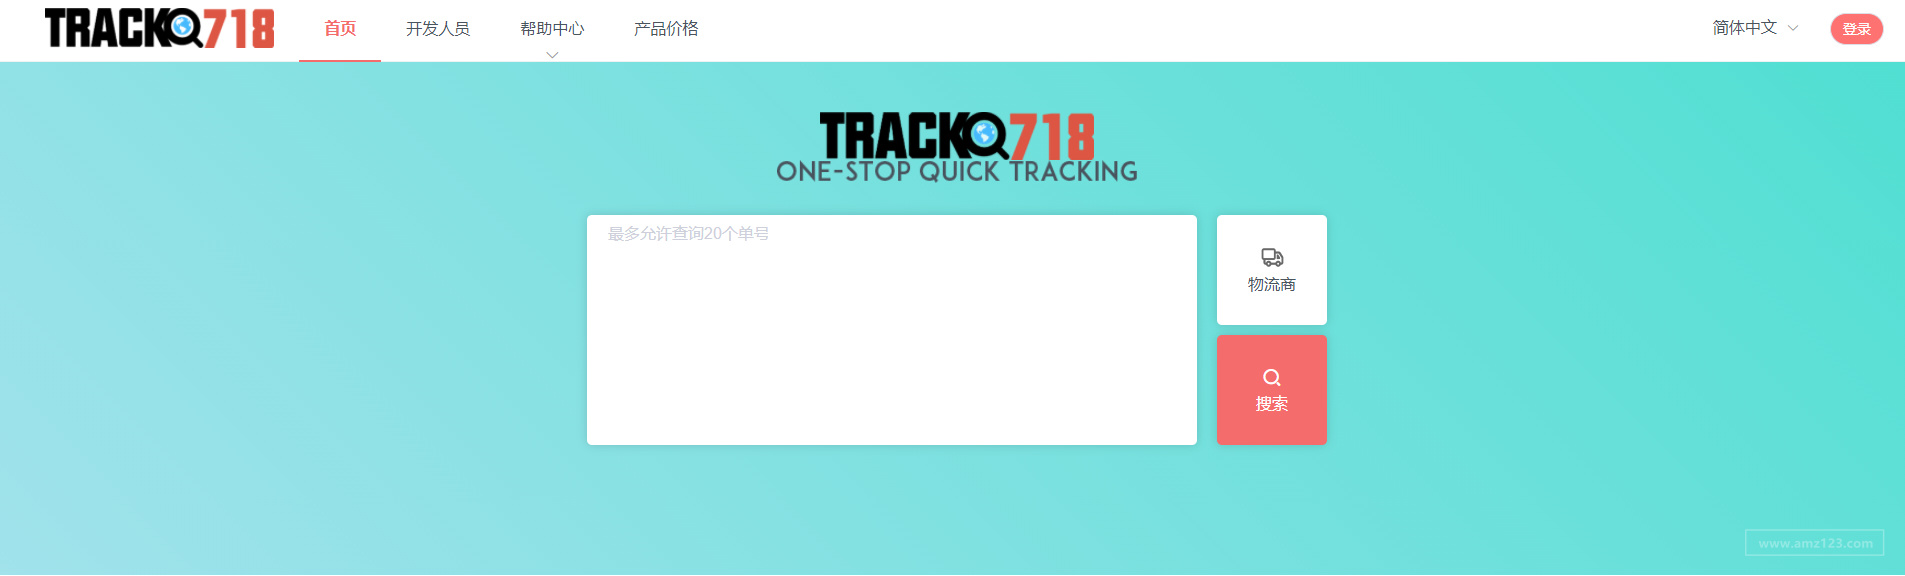 Track718